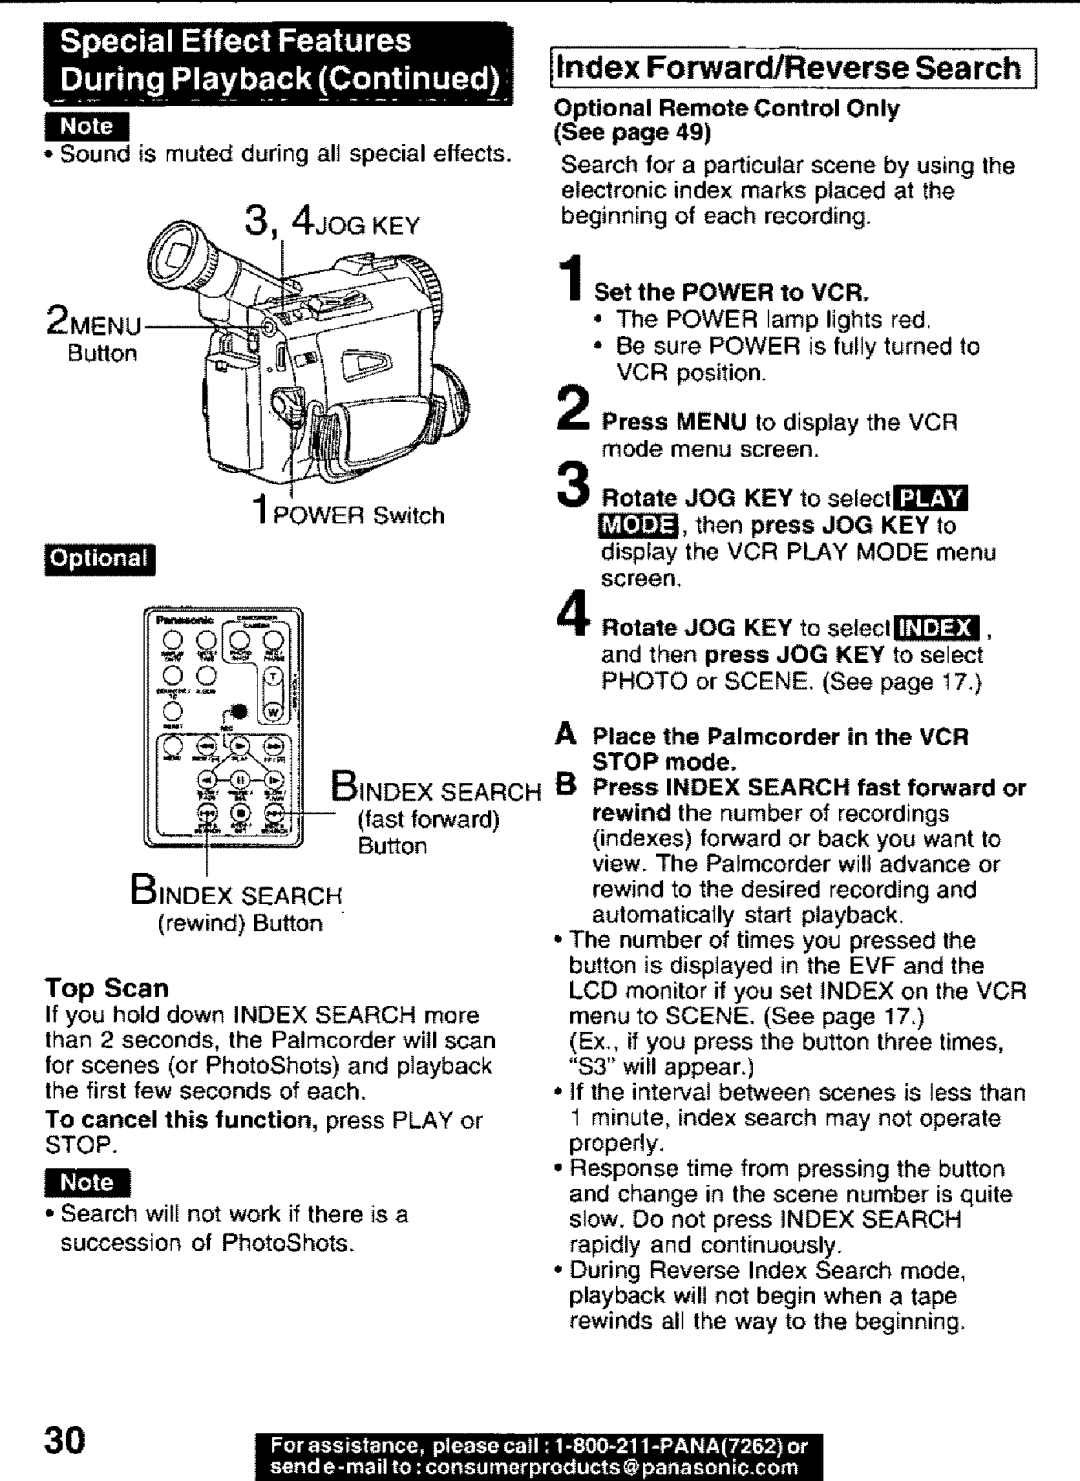 Panasonic PV-DV101 manual B,Ndexsearch, Ilndex Forward/Reverse Search, 4JOG KEY, I,tYt 